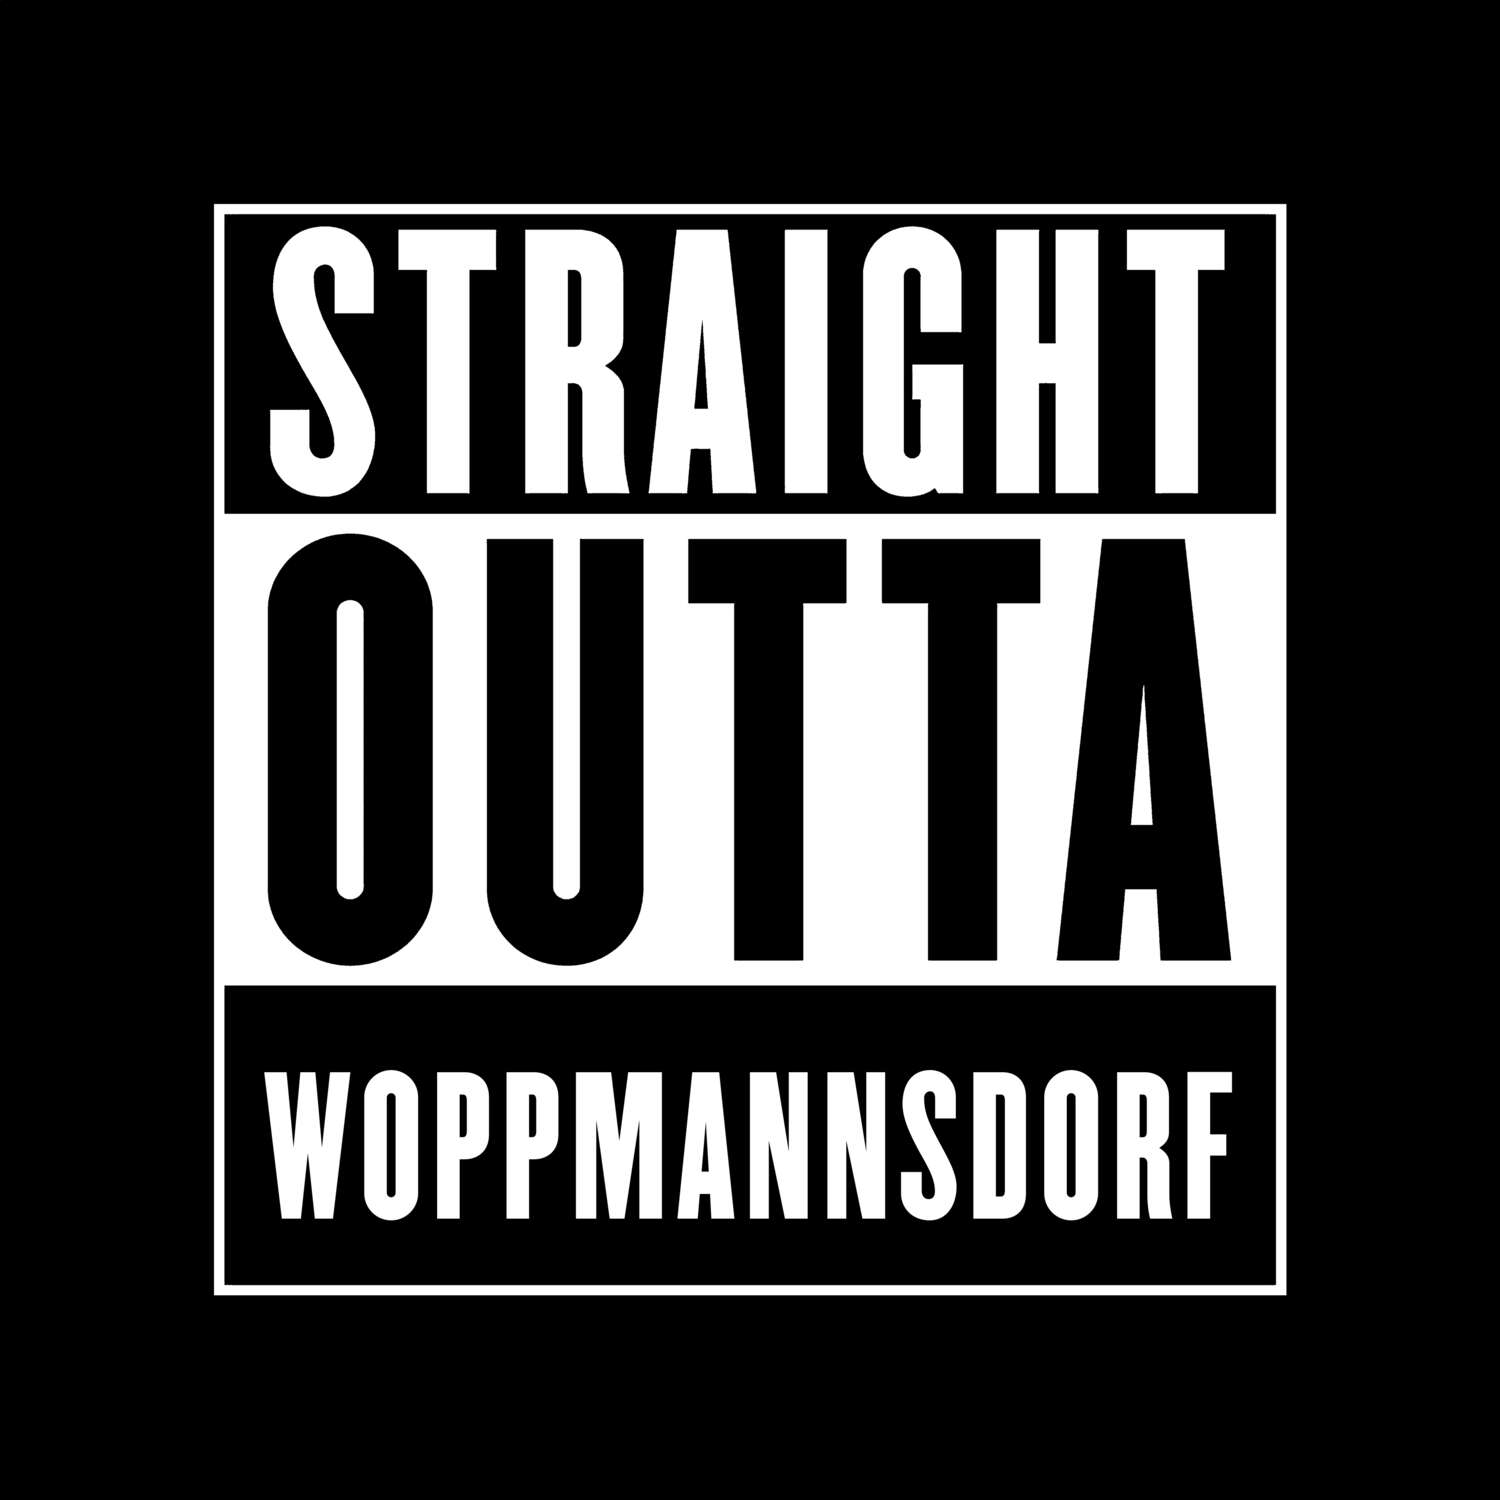 Woppmannsdorf T-Shirt »Straight Outta«